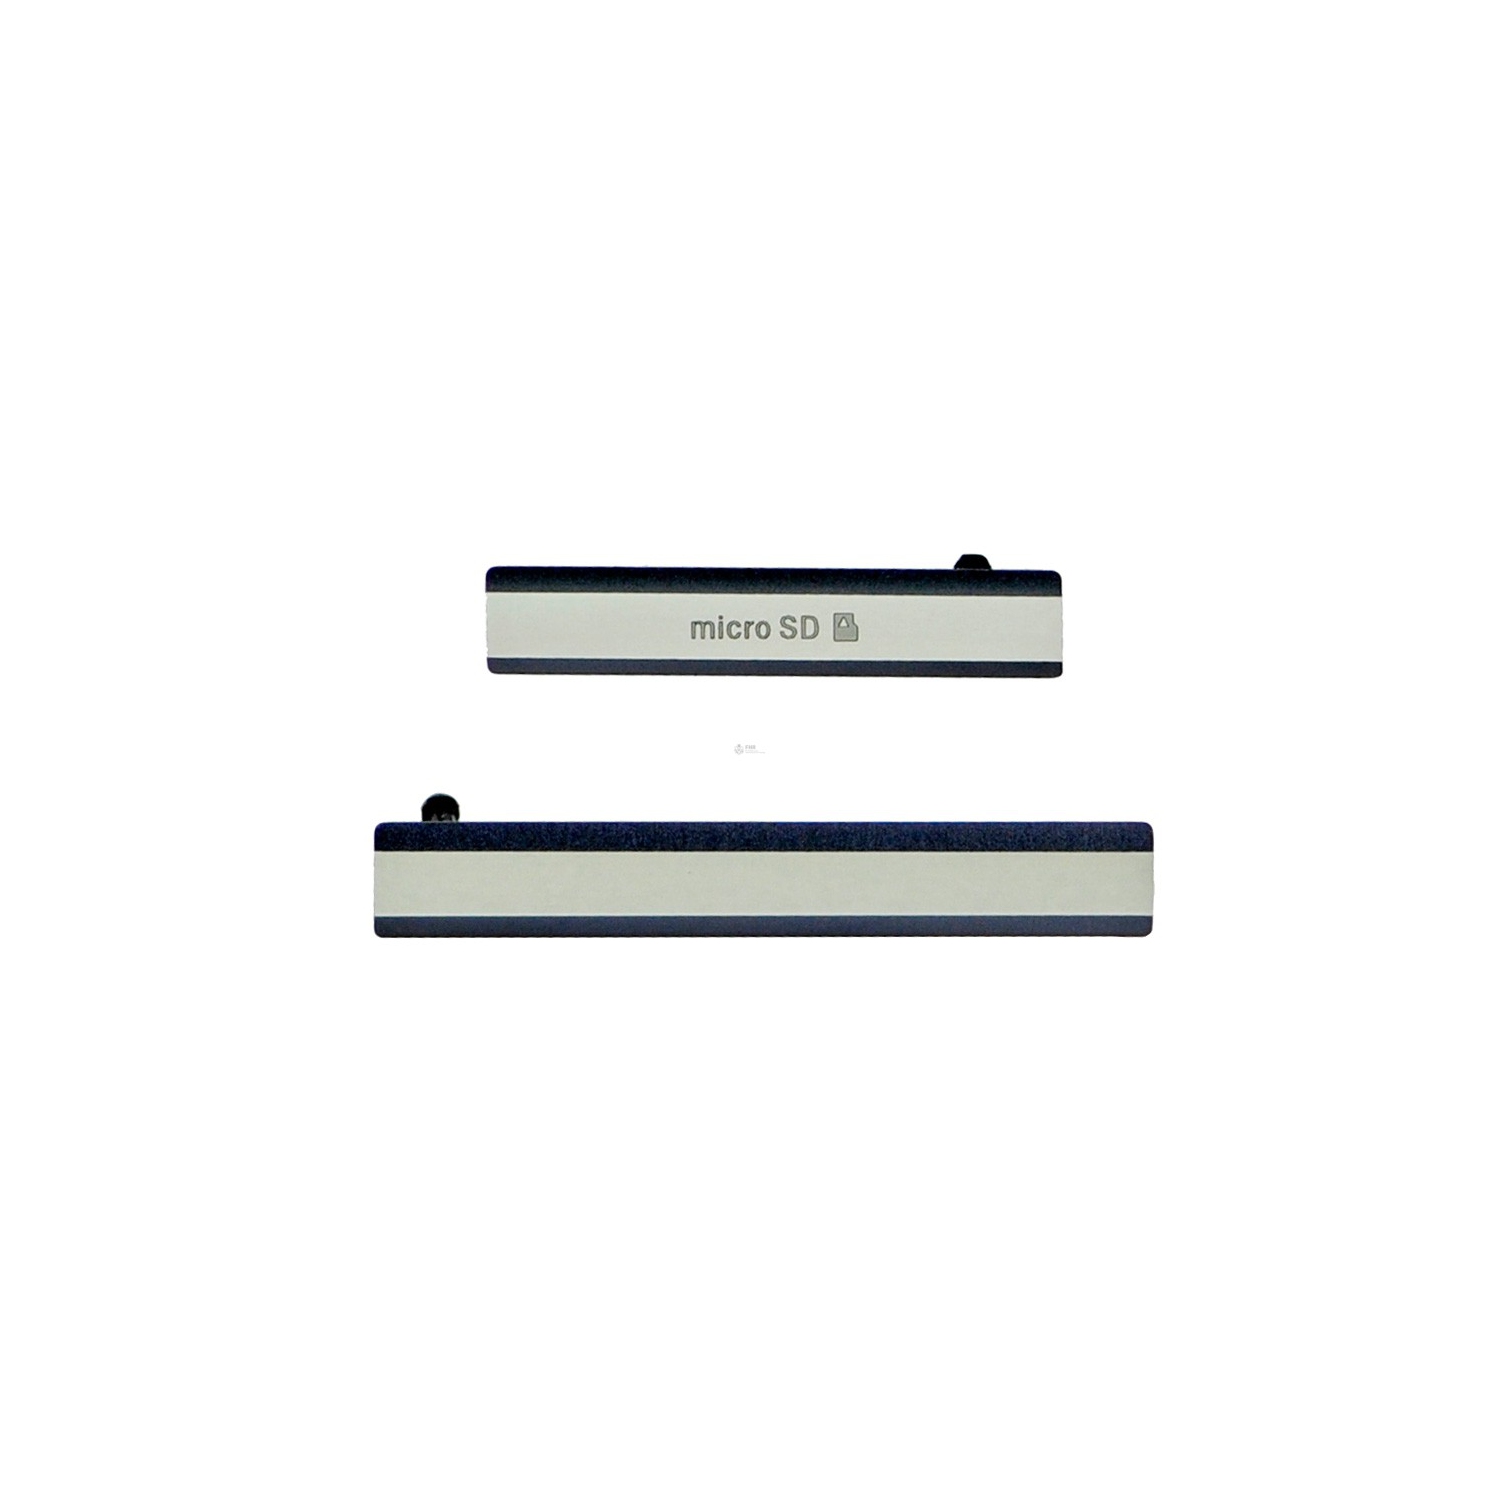 Sony Xperia Z2 SD Card Cap Set (2 pcs/set) - Sliver